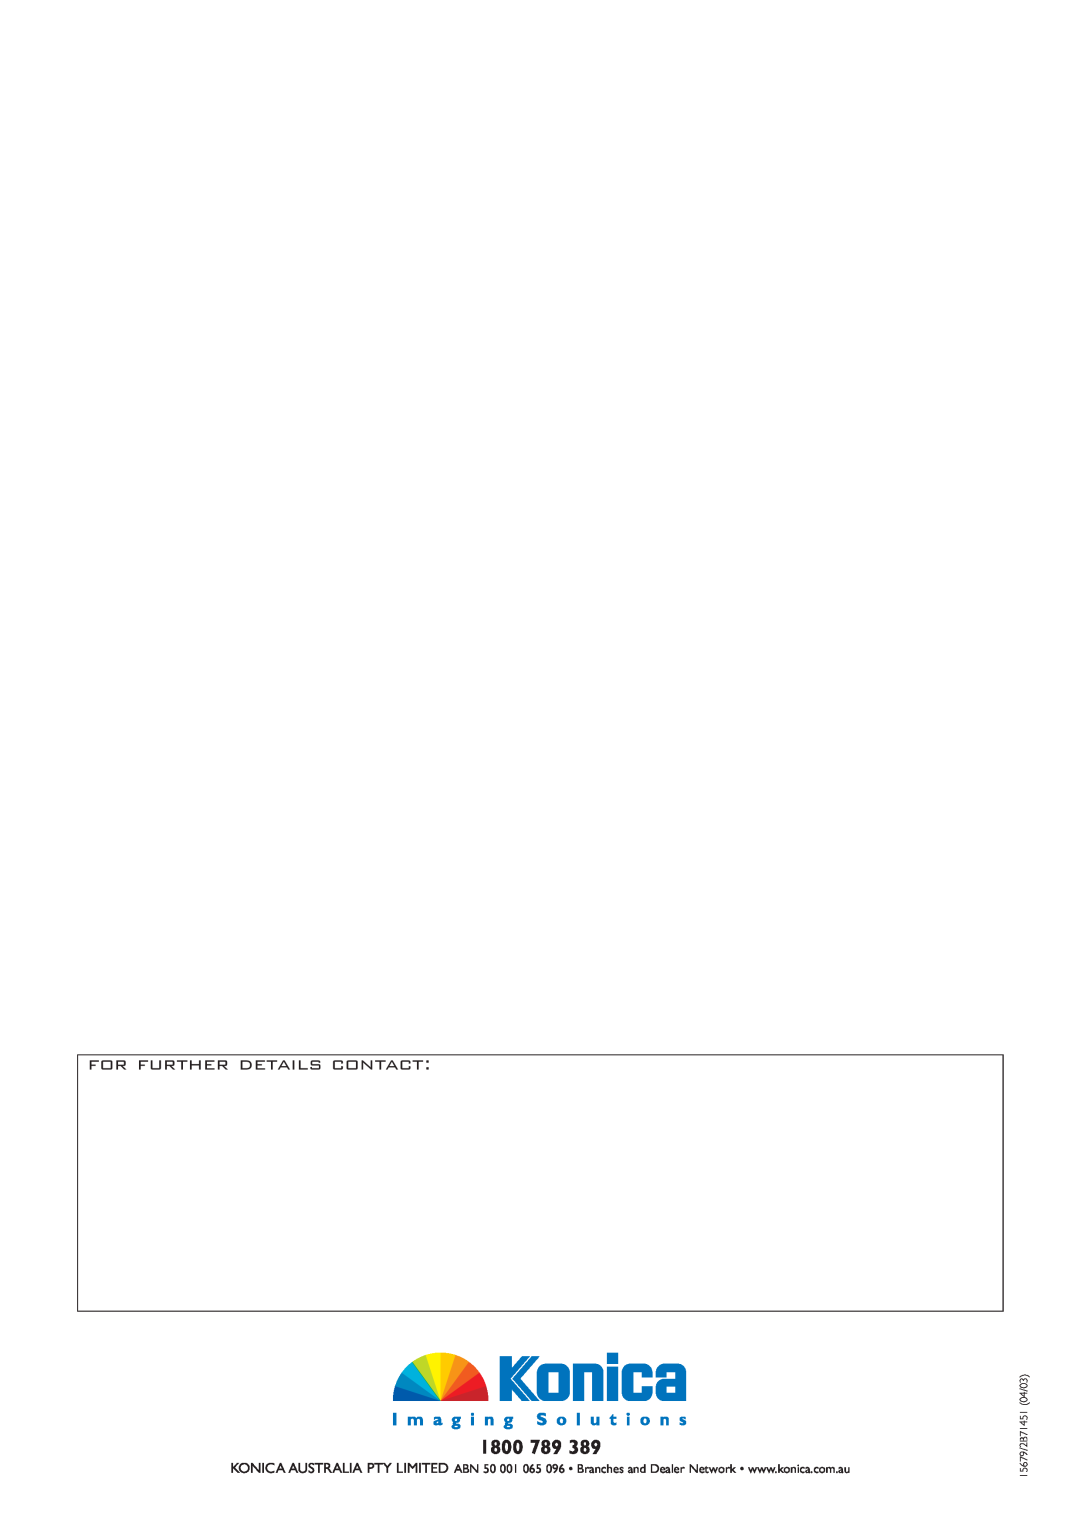 Konica Minolta manual for further details contact, 1800, 15679/2B71451 04/03 